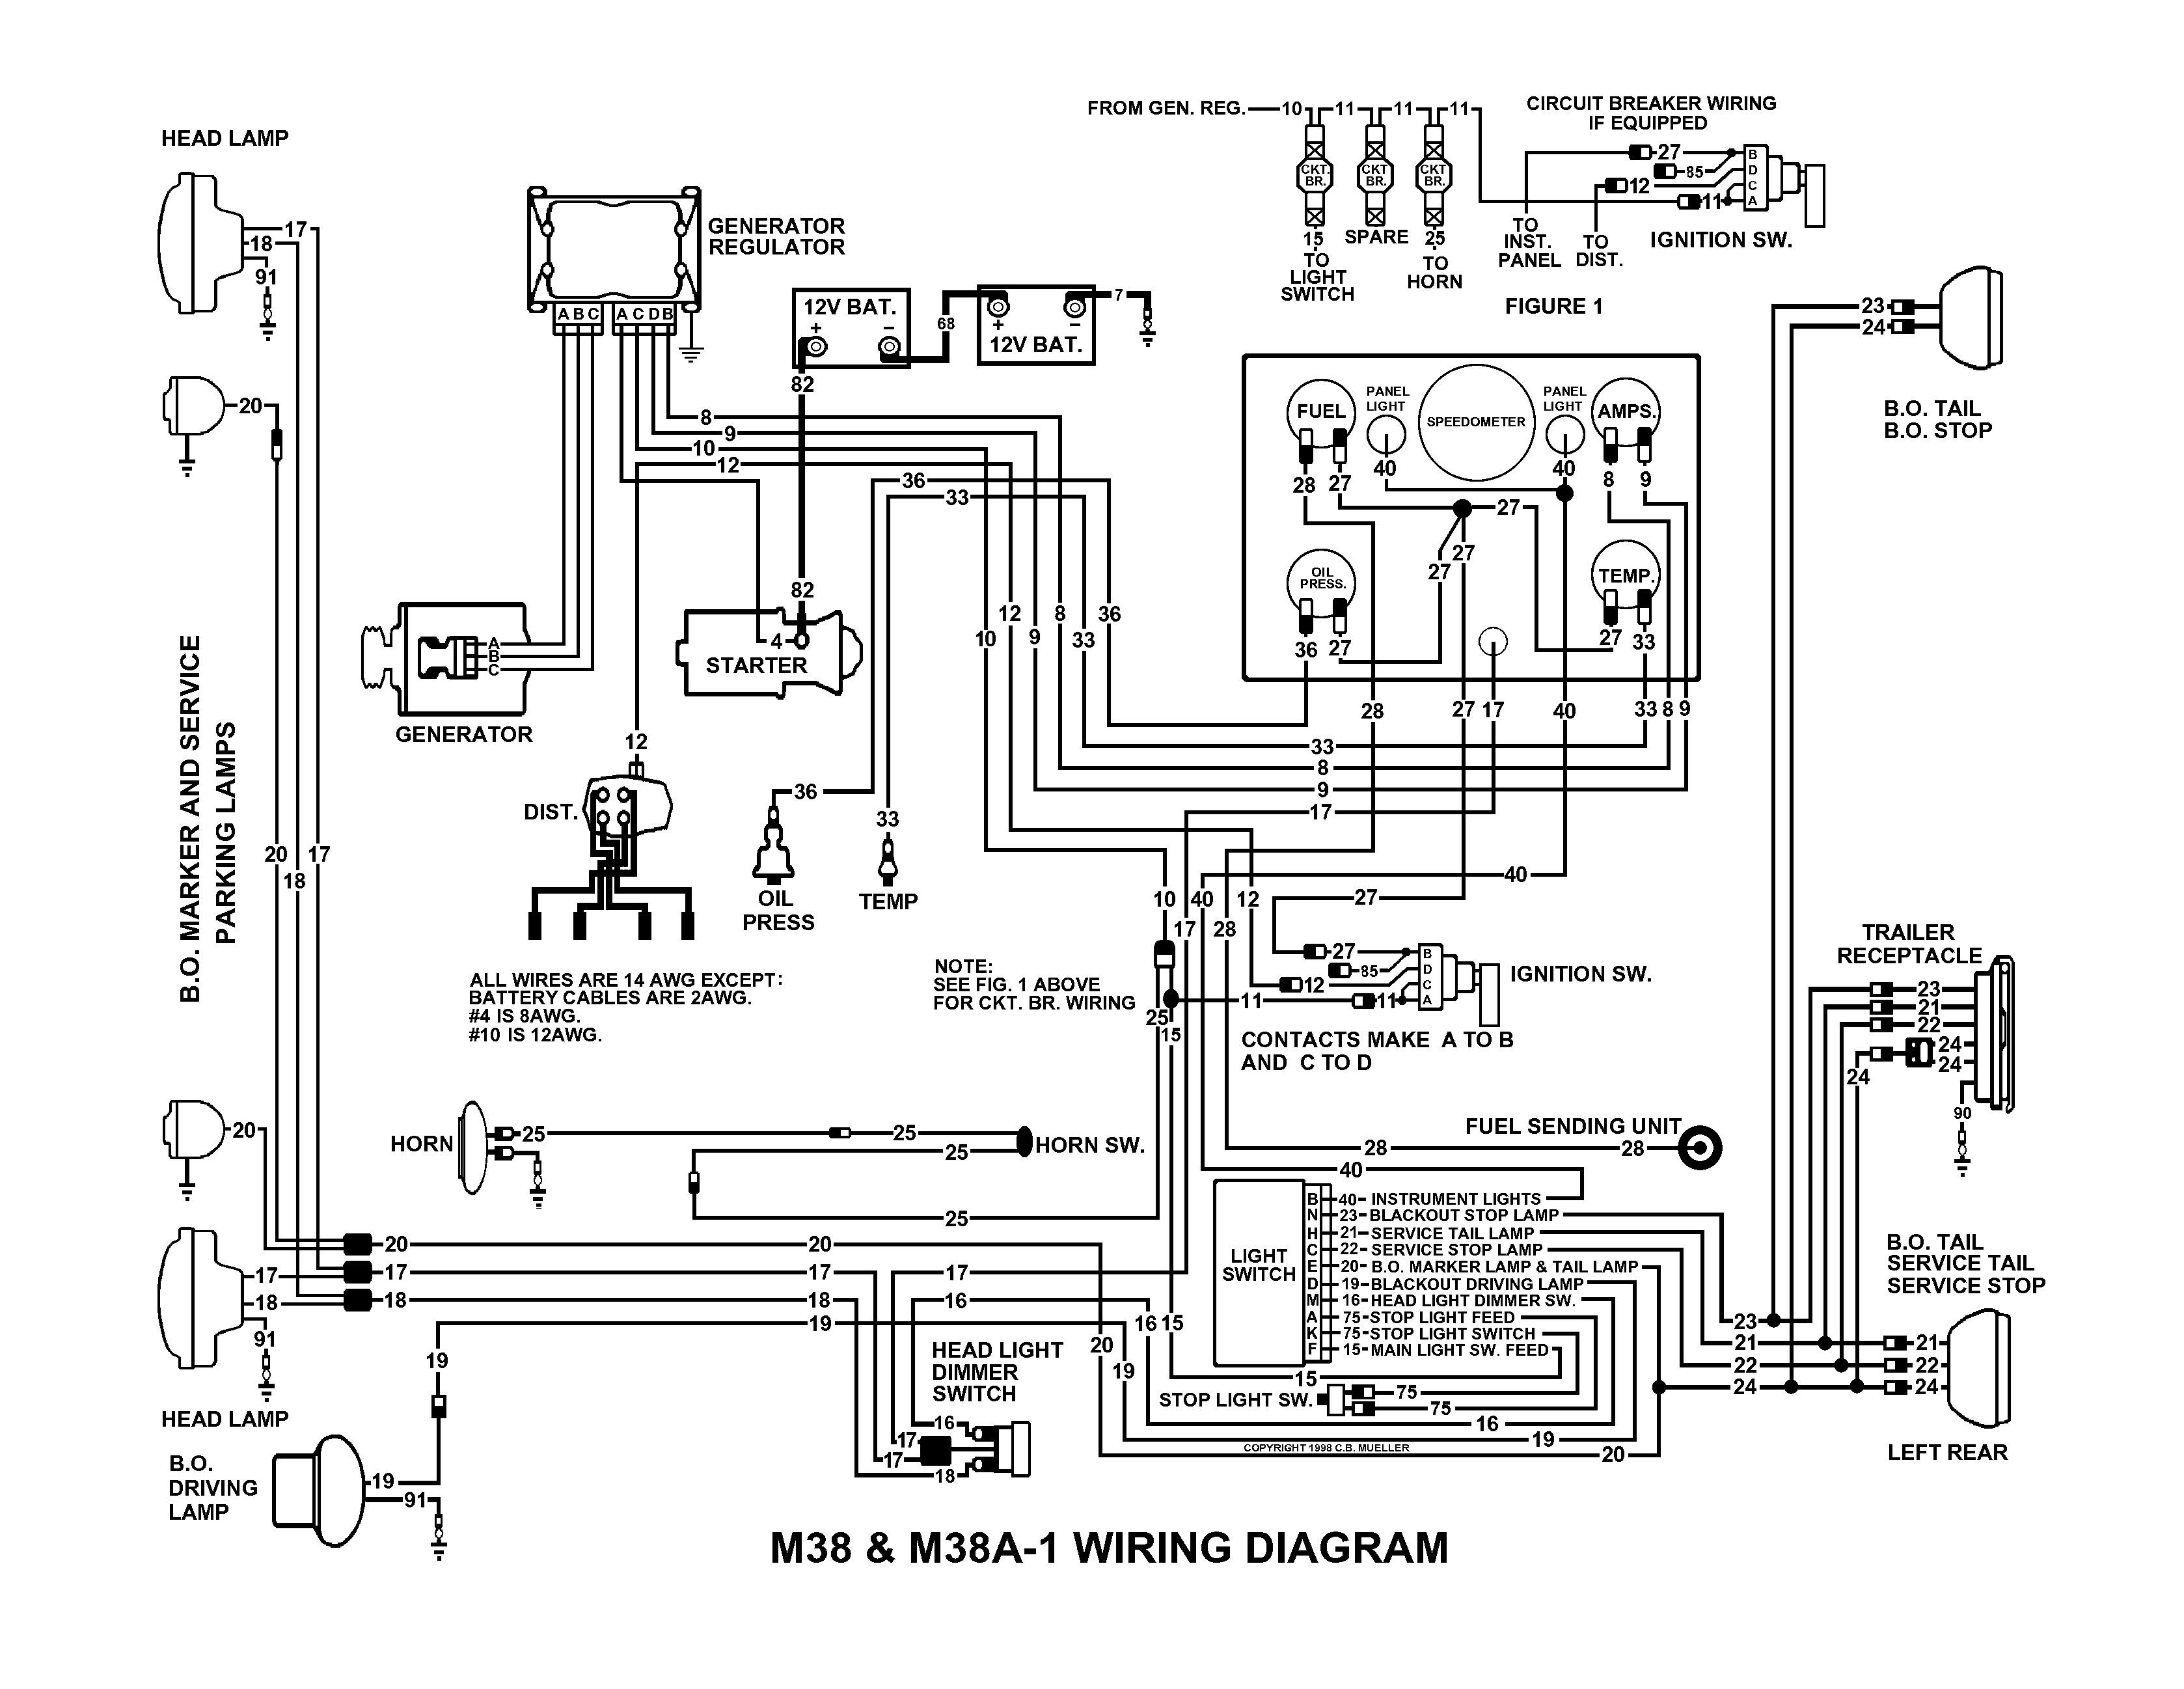 M38a1 Wiring Diagram